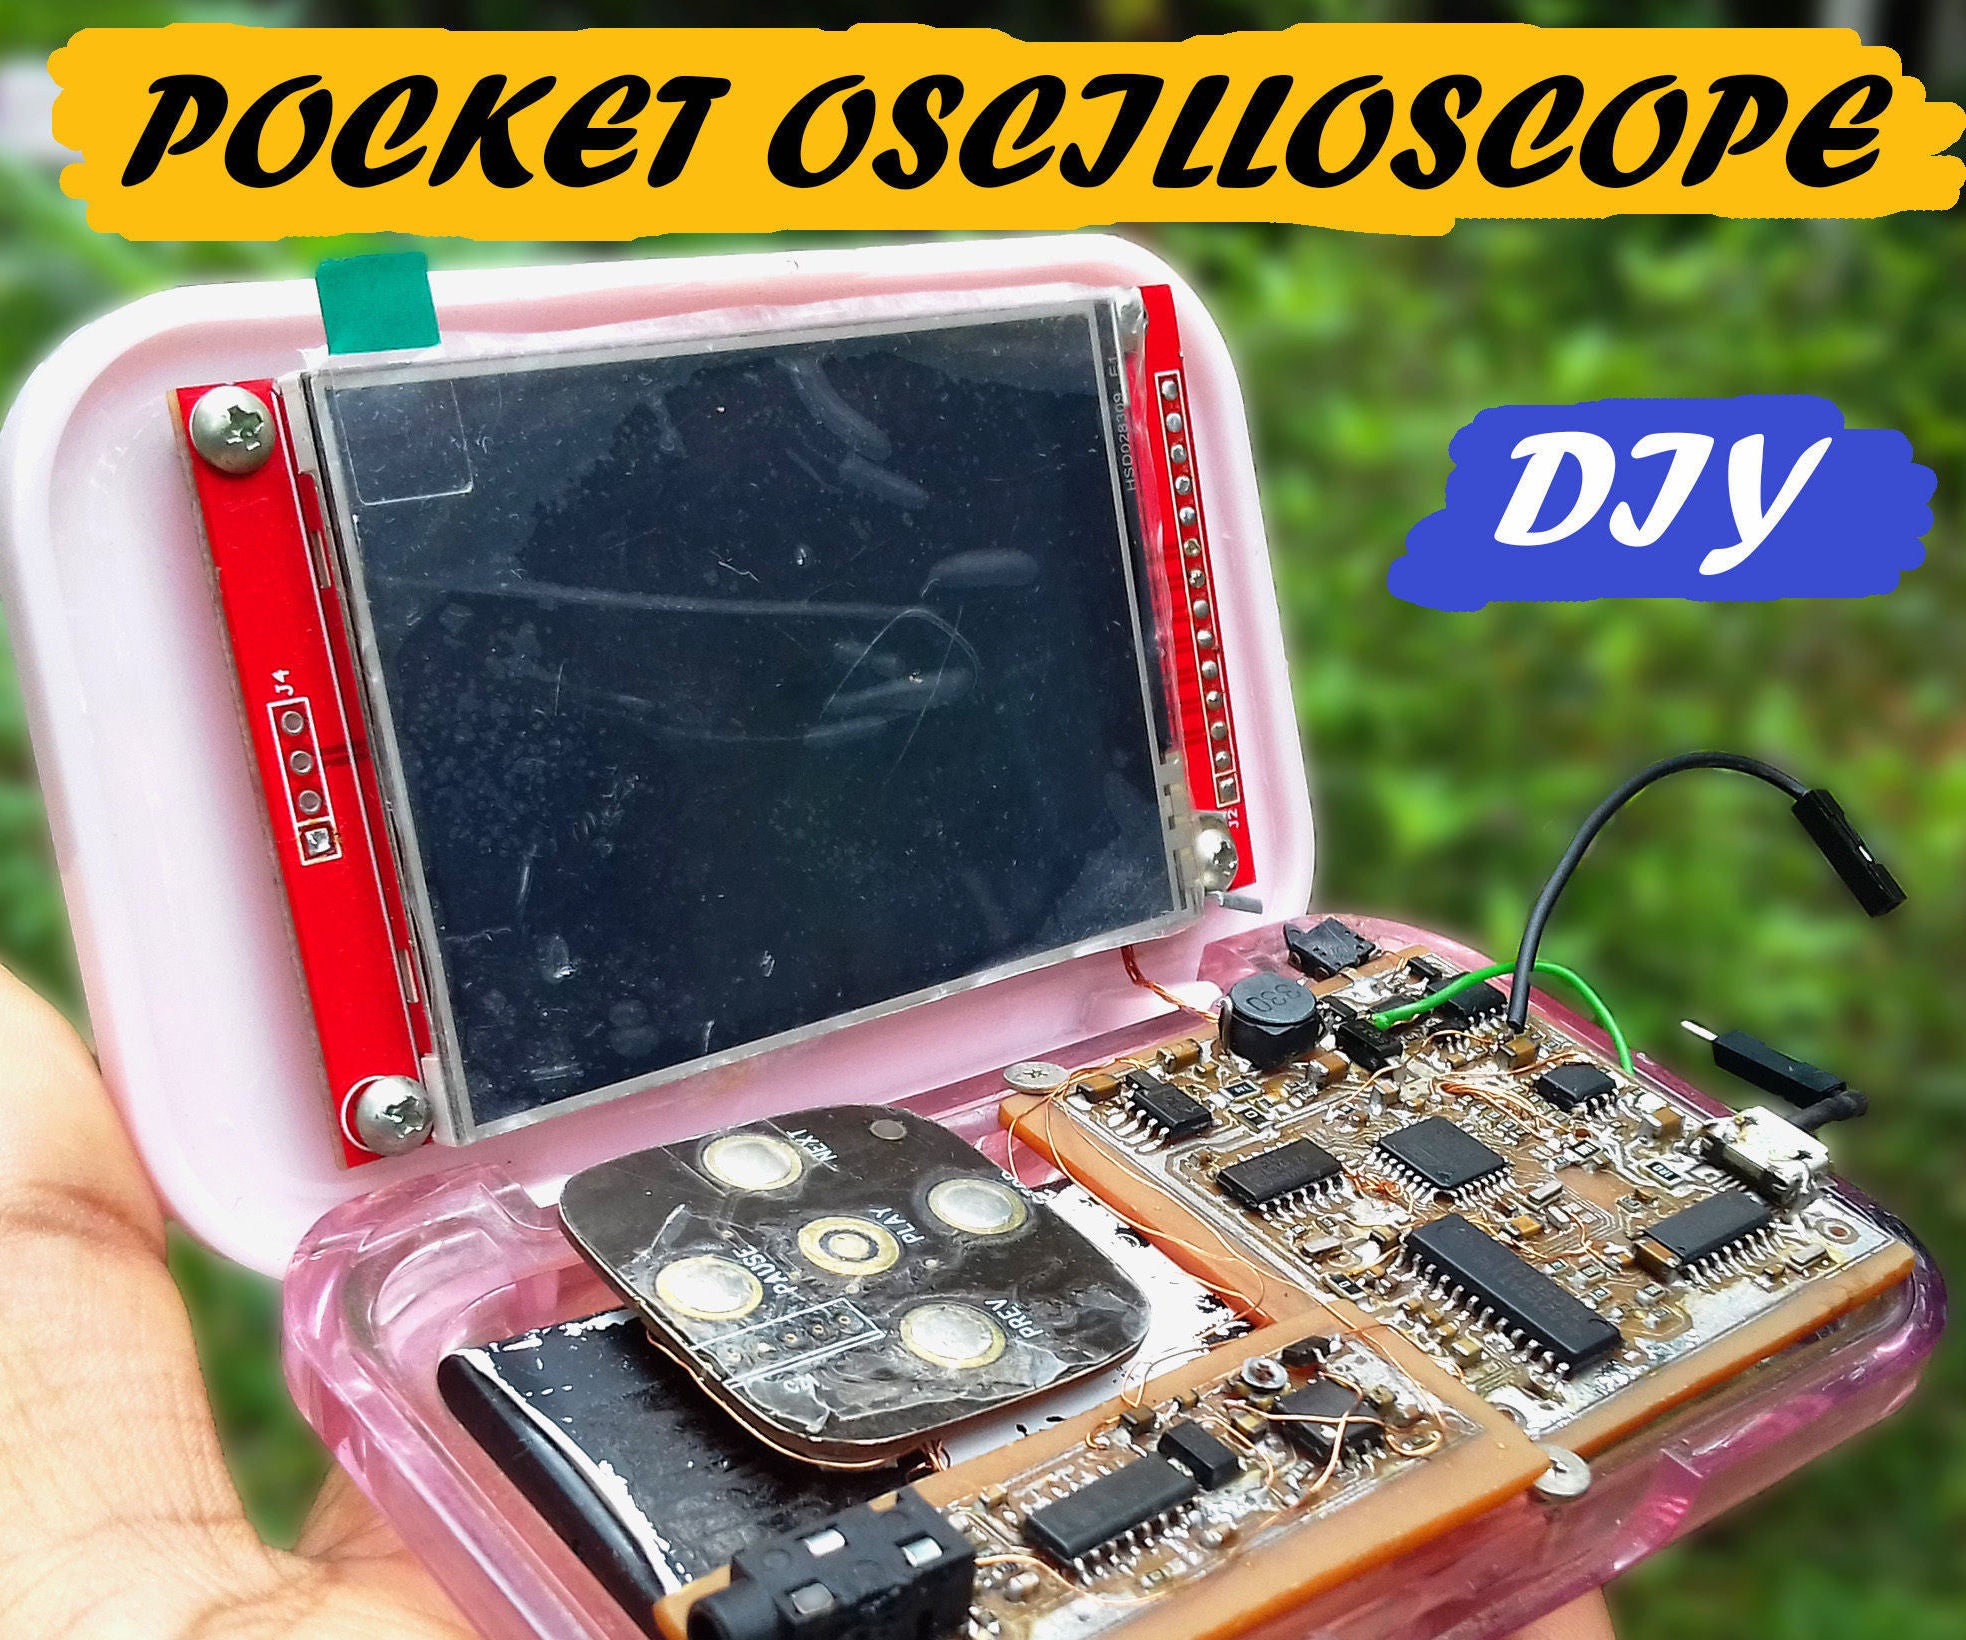 Pocket Signal Visualizer (Pocket Oscilloscope)